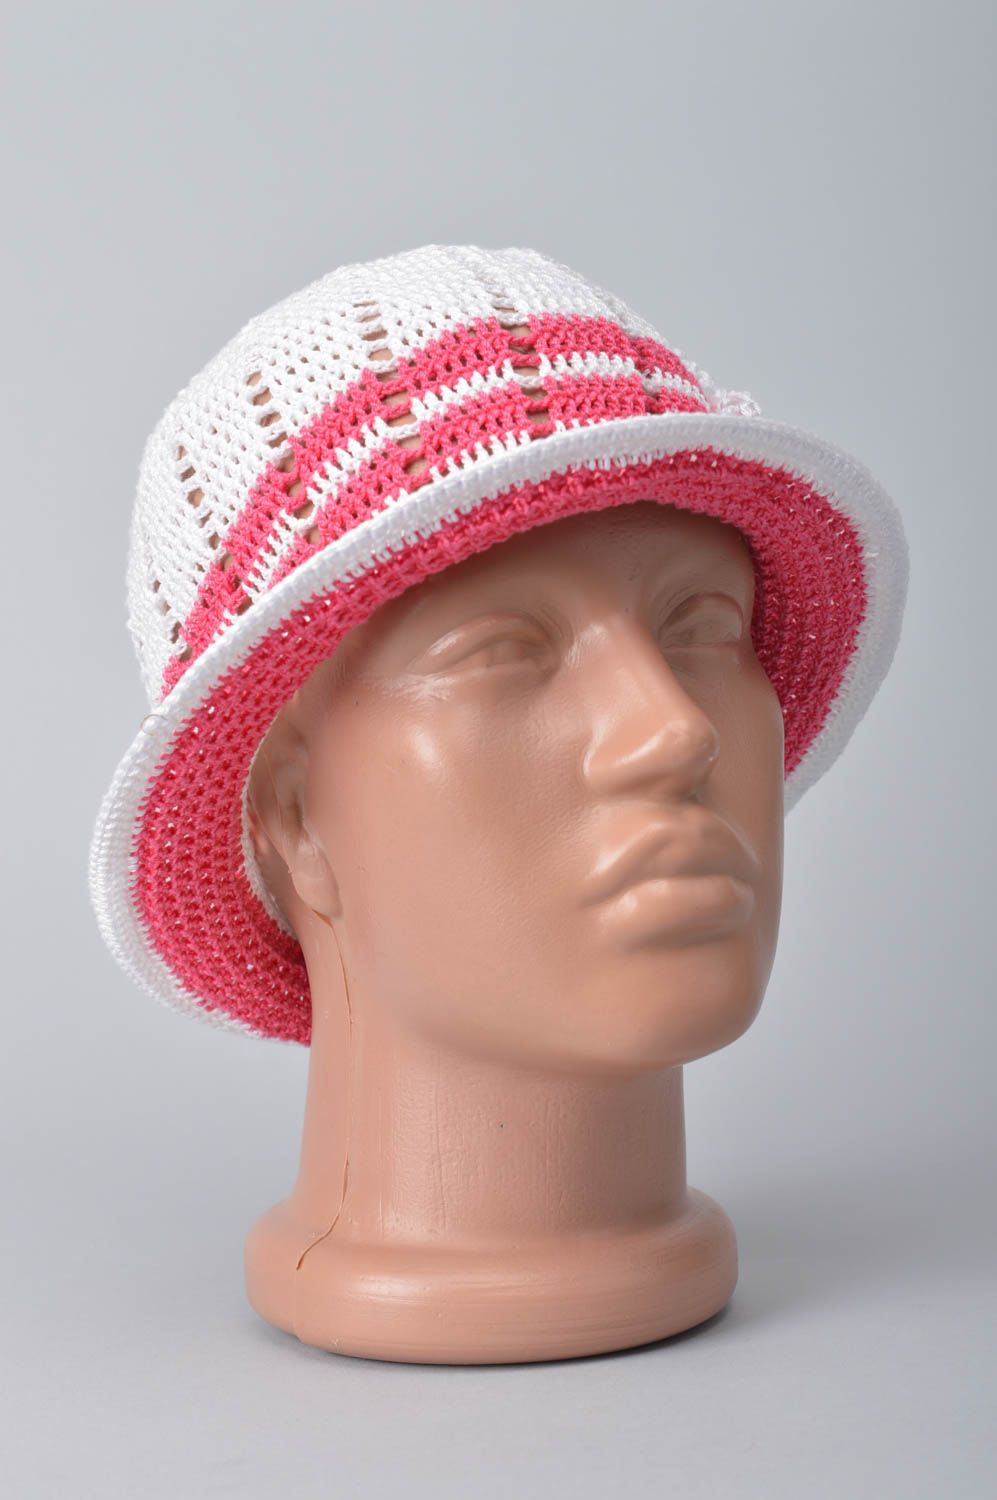 Handmade summer hat cute baby hats fashion accessories kids accessories photo 1